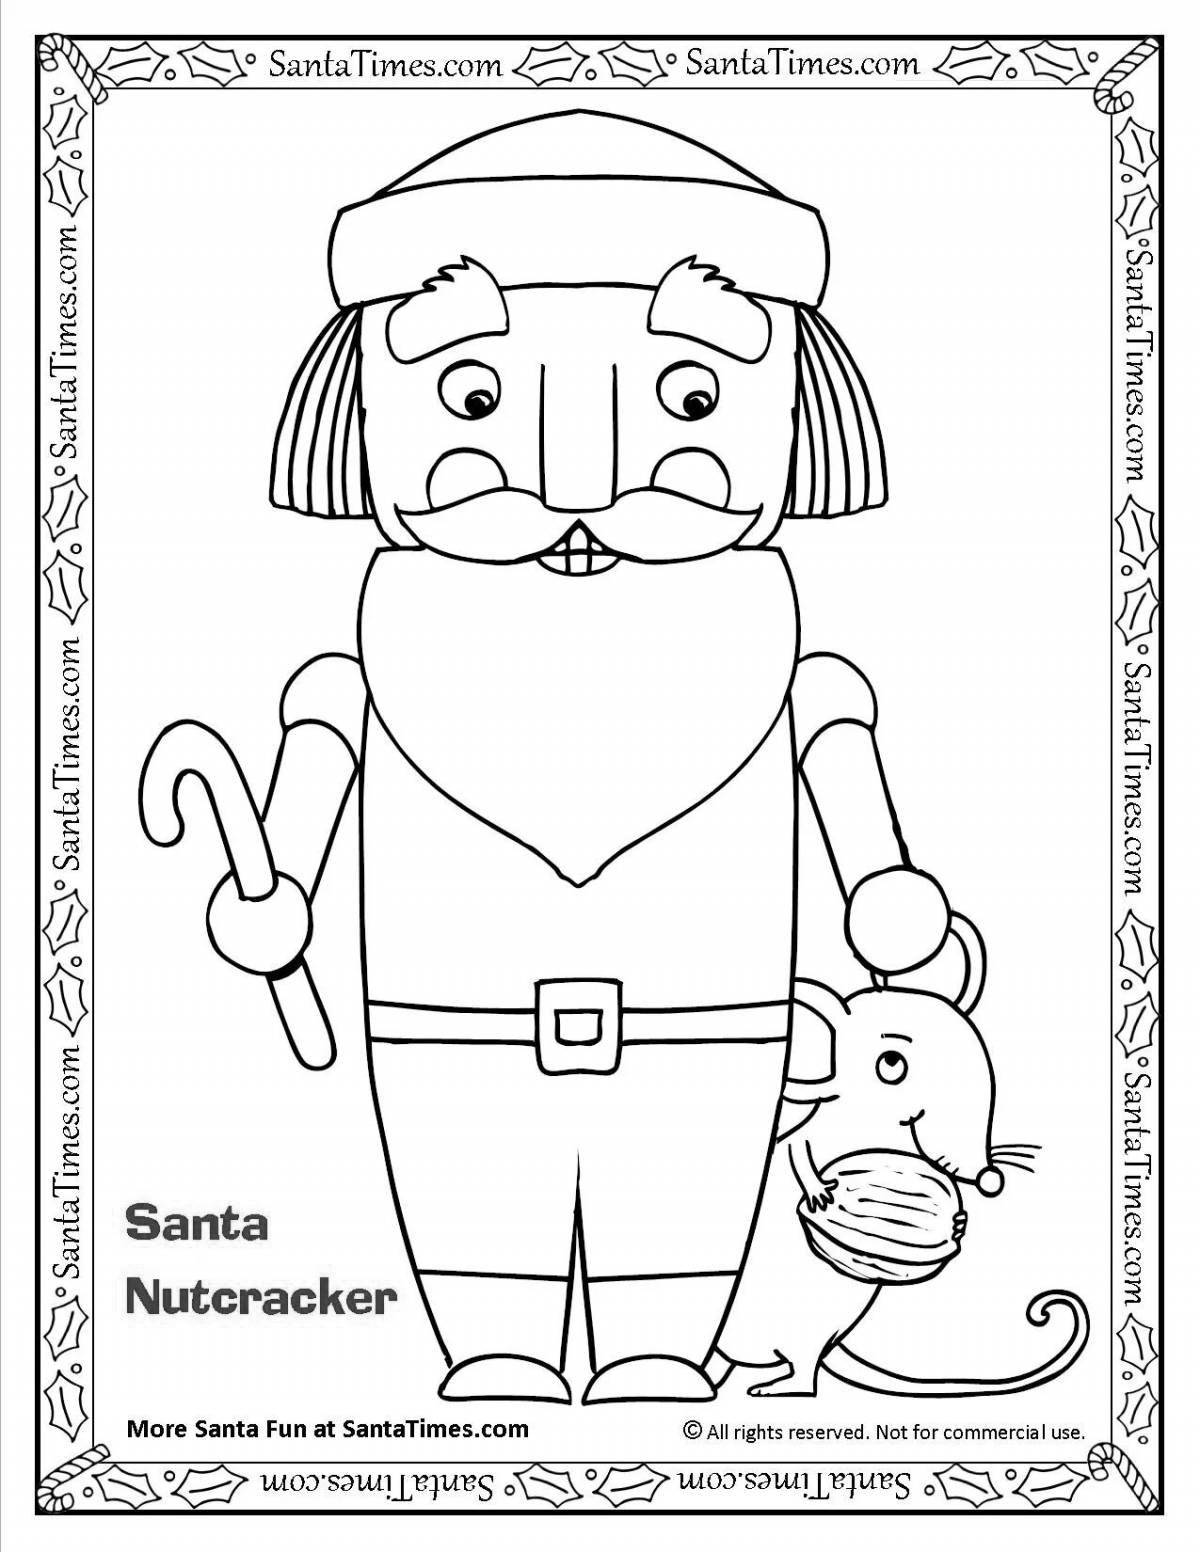 Nutcracker colorful coloring book